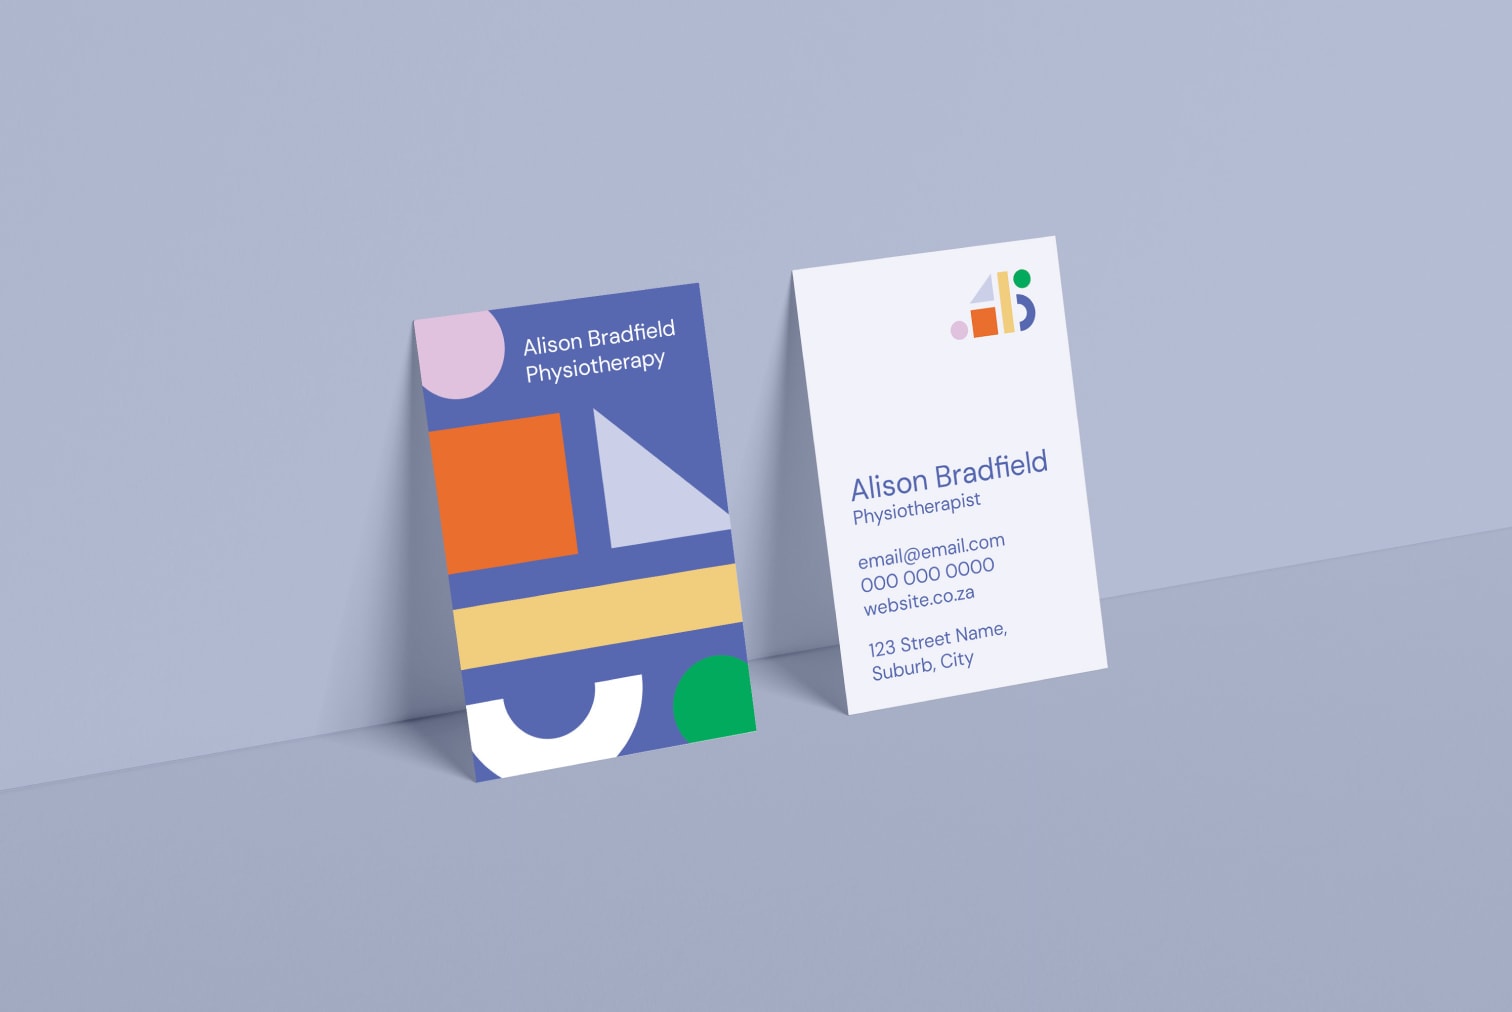 Alison Bradfield Digital Butter Portfolio 02 Business Cards